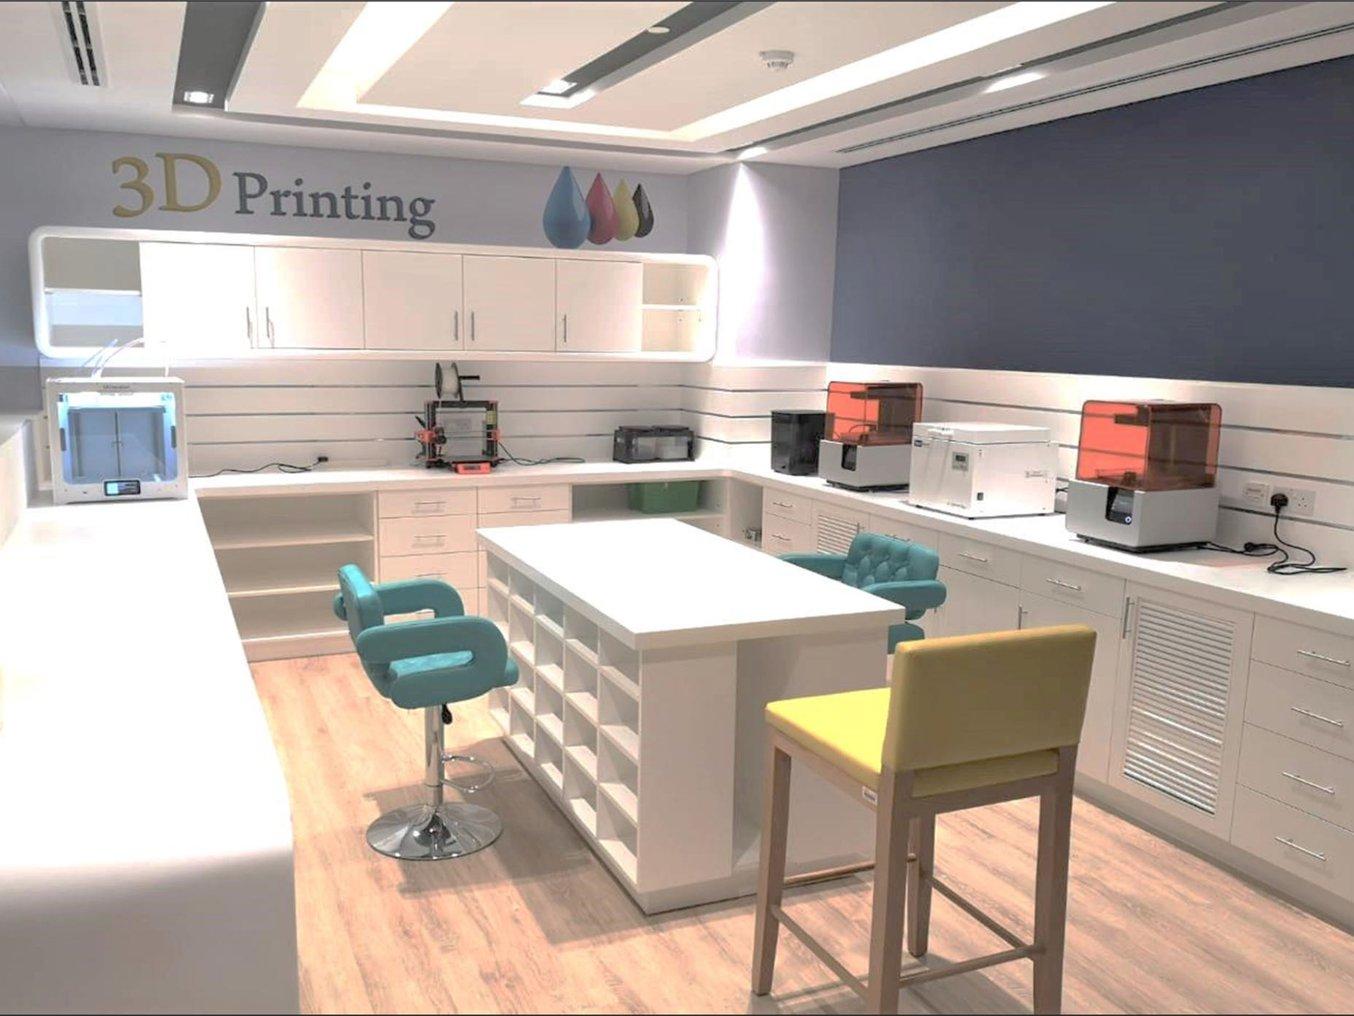 Sinterex's 3D Printing Lab